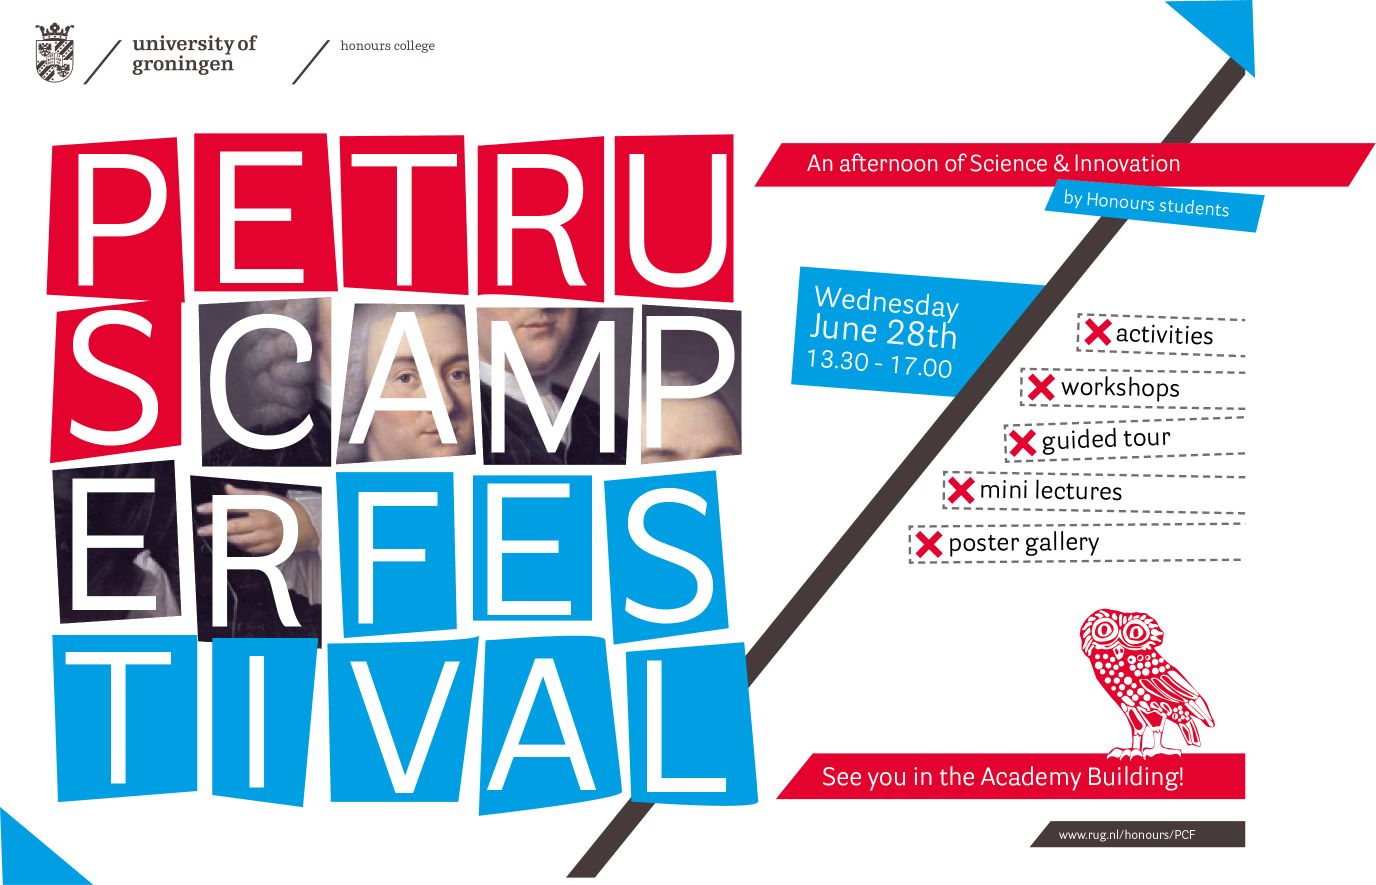 Visit the Petrus Camper Festival!